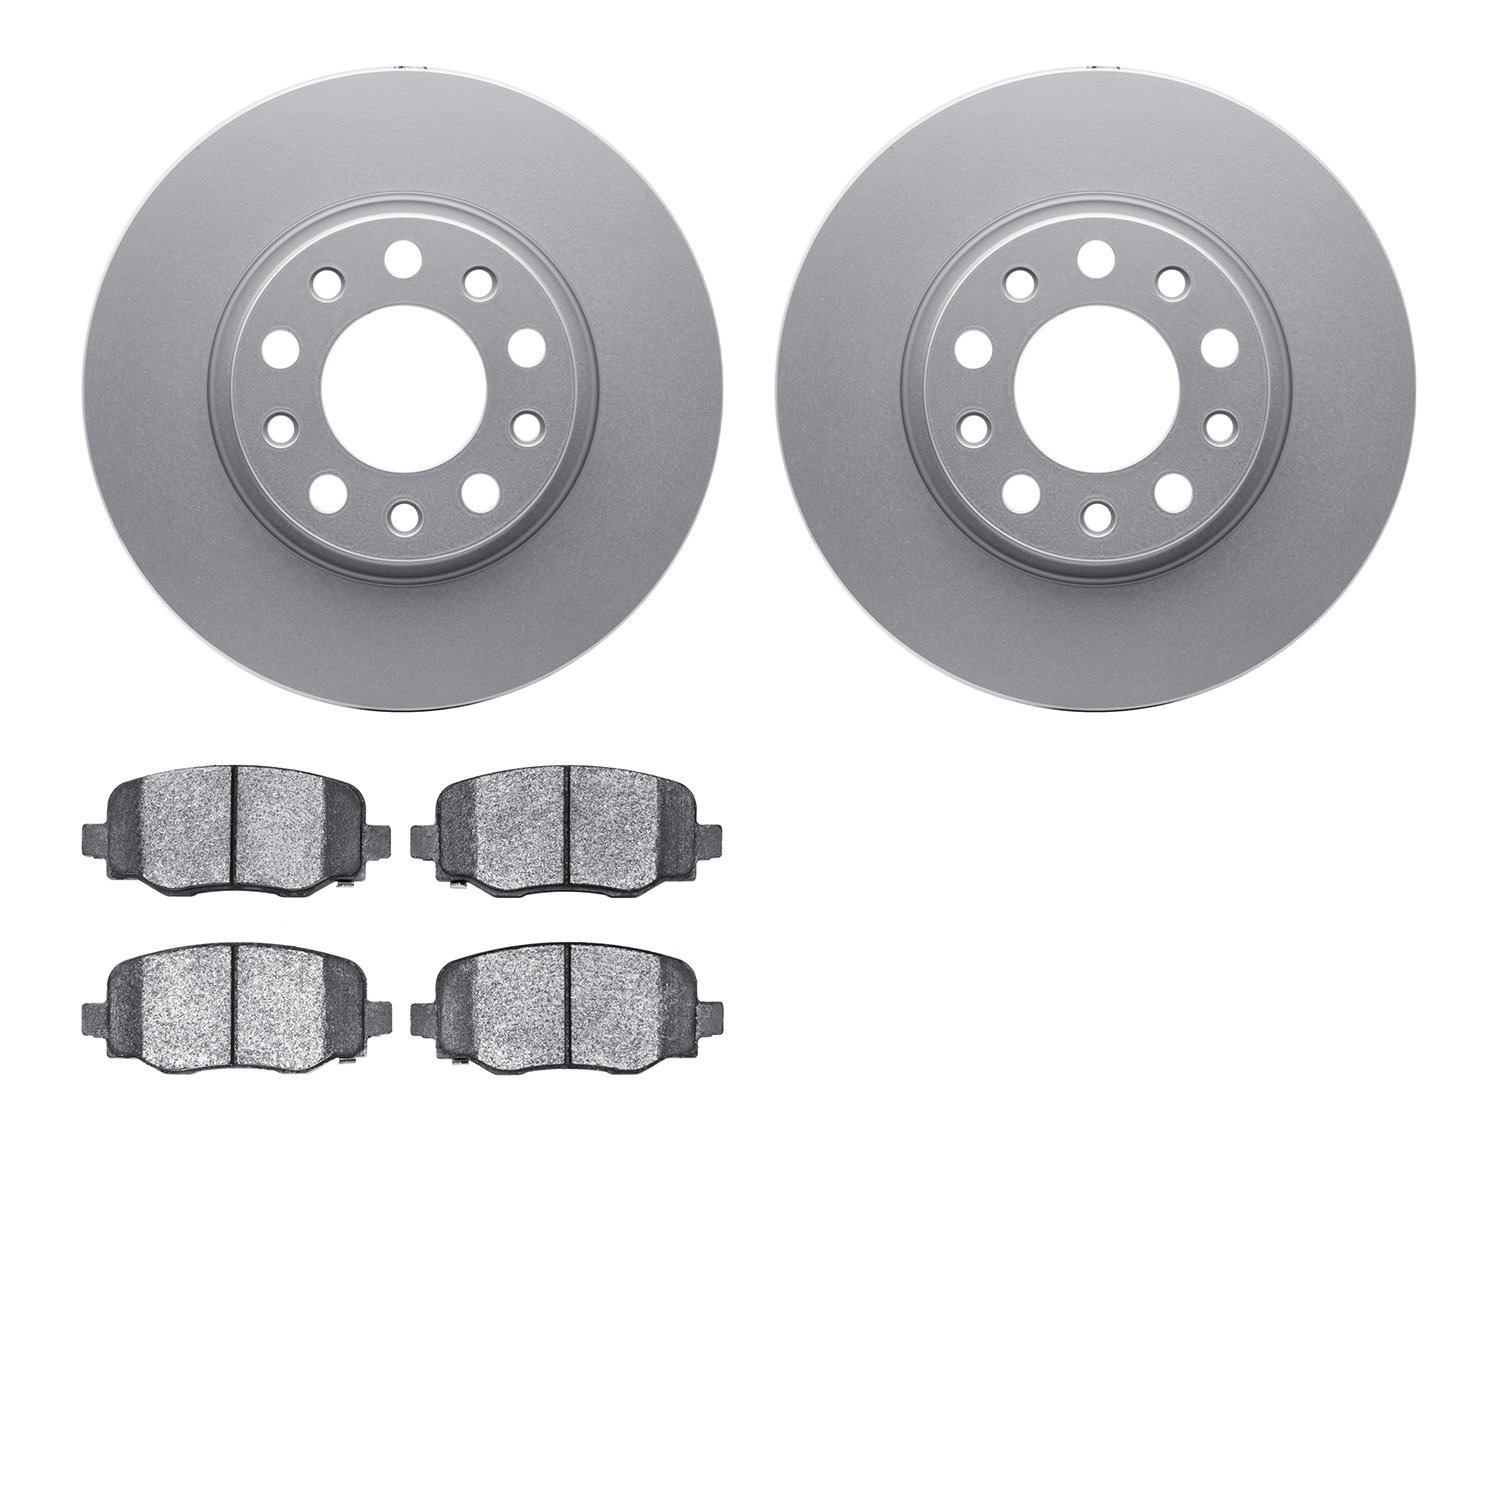 4402-42013 Geospec Brake Rotors with Ultimate-Duty Brake Pads Kit, Fits Select Mopar, Position: Rear